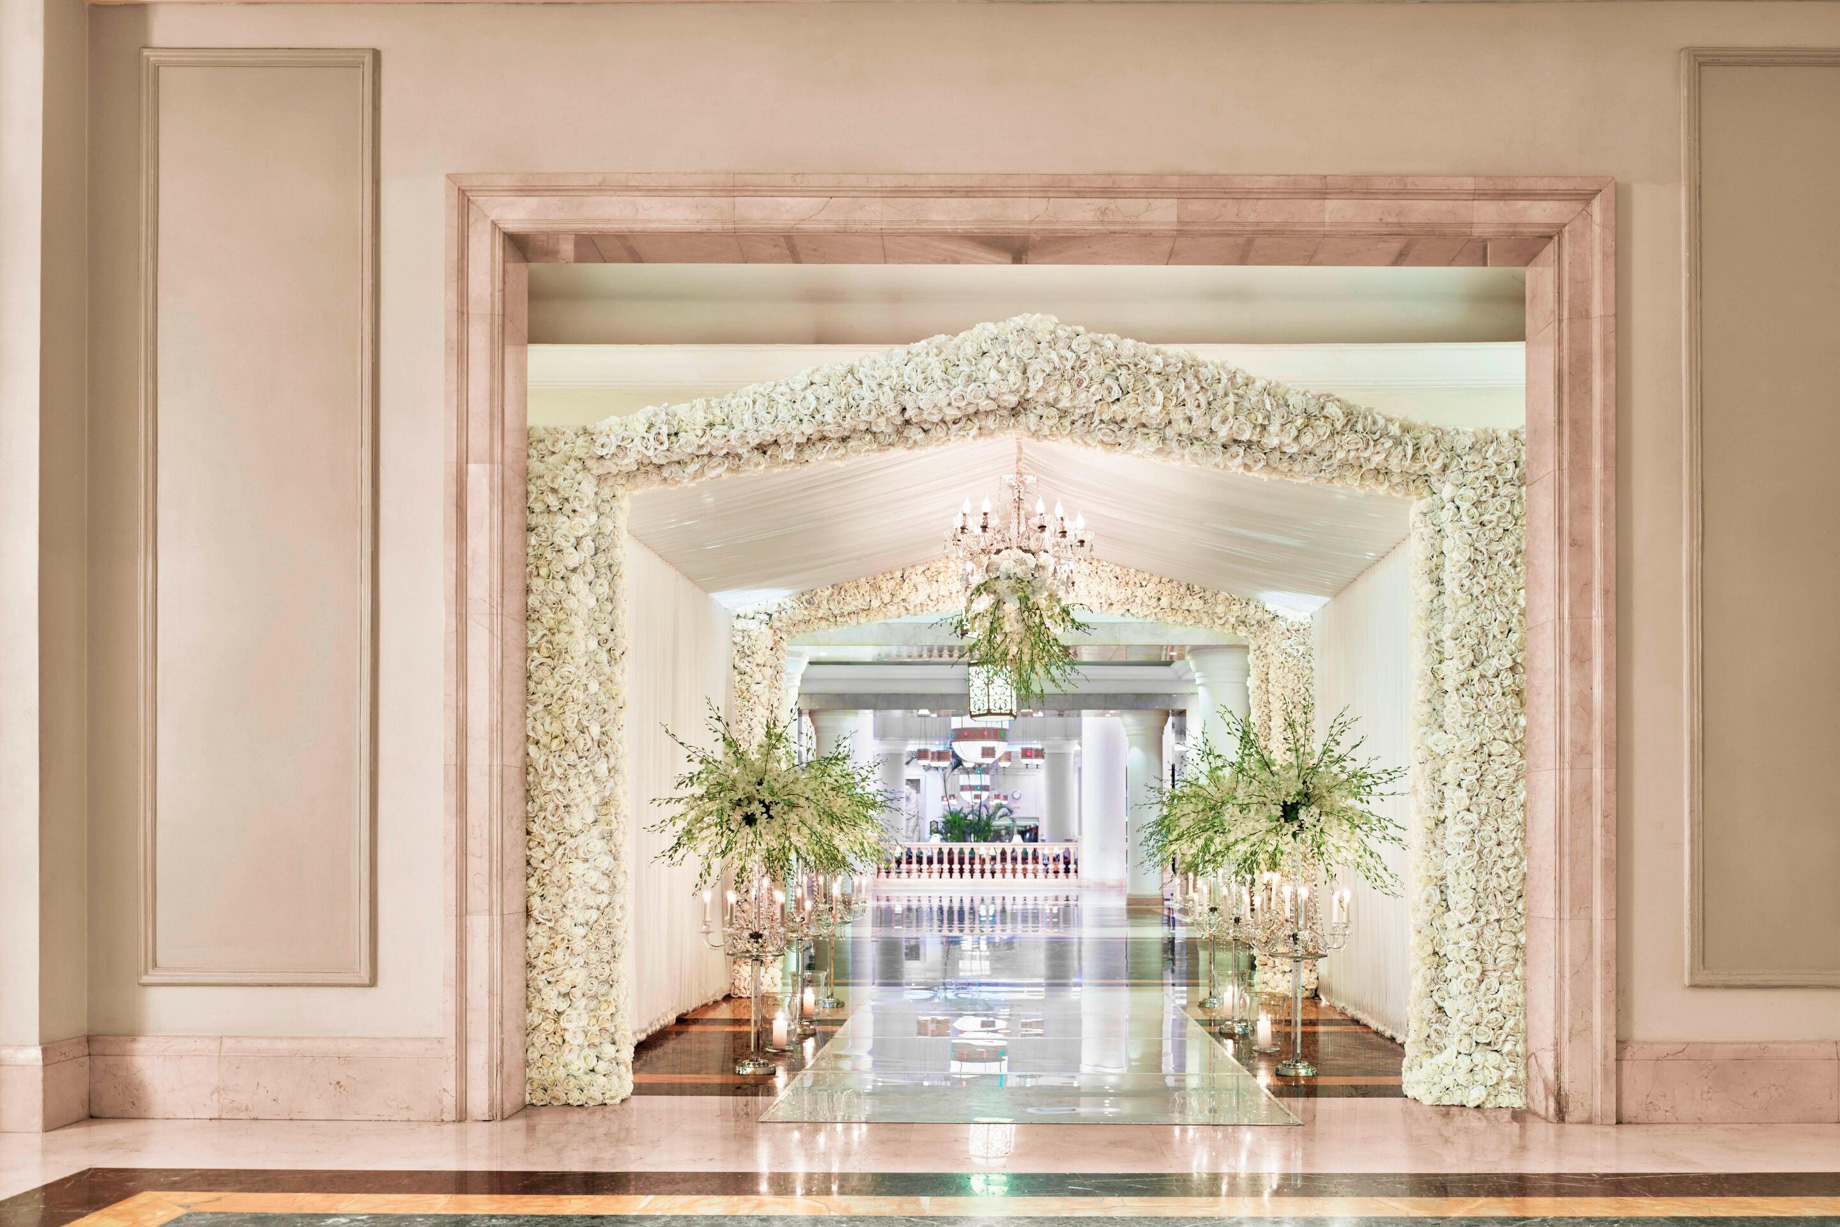 JW Marriott Hotel Cairo - Cairo, Egypt - Tutankhamun Ballroom Wedding Entrance